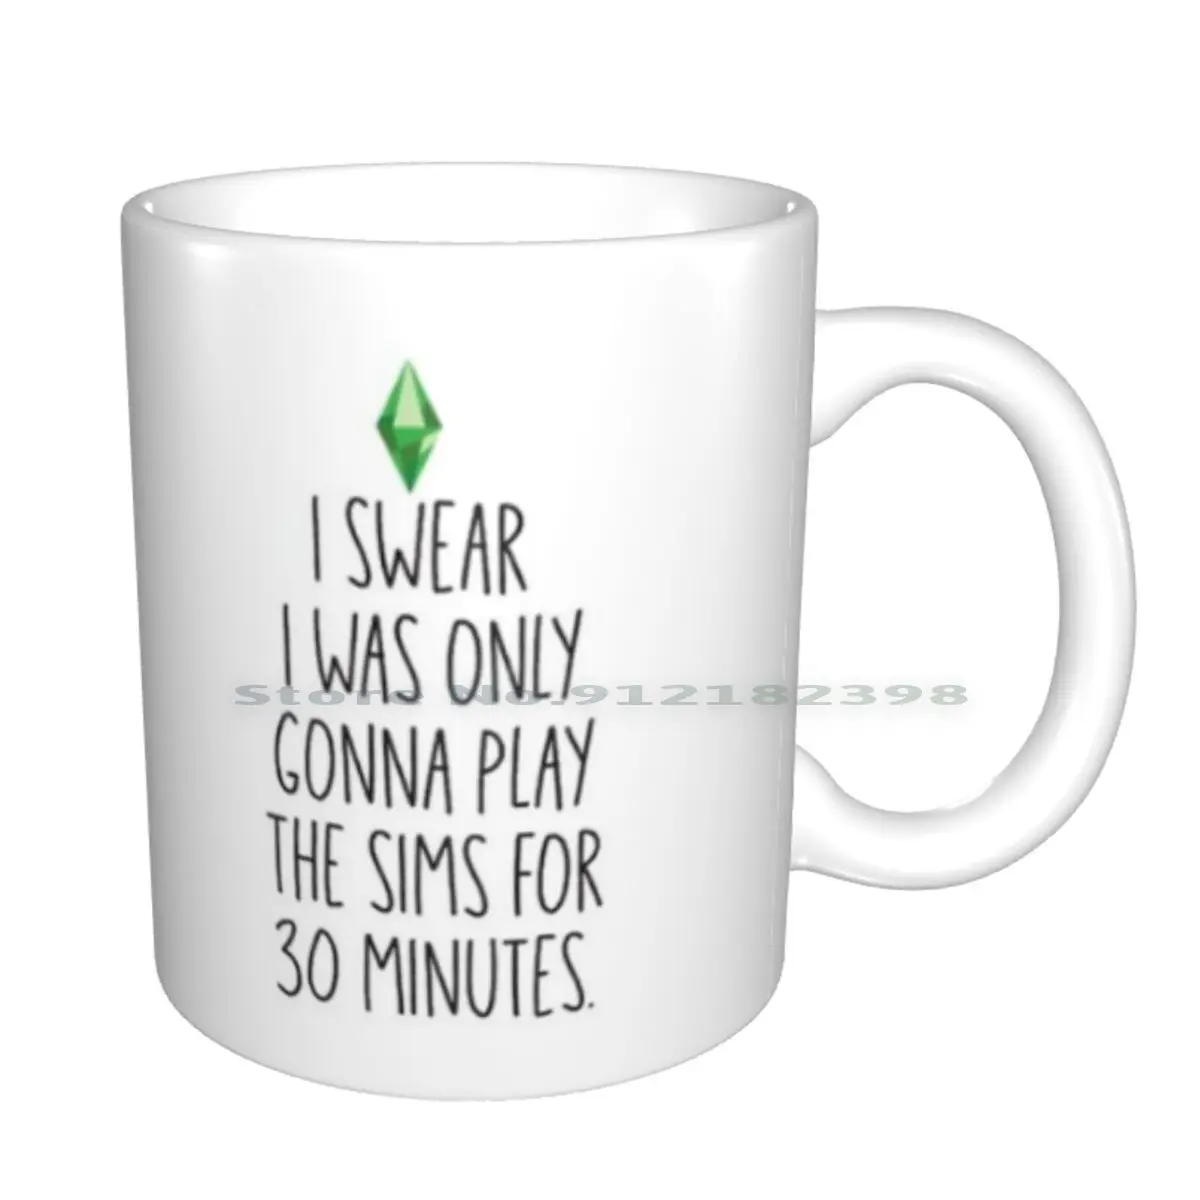 https://ae01.alicdn.com/kf/H02c768347ed942d688cc24a47e650fd40/The-Sims-Mood-30-Min-Ceramic-Mugs-Coffee-Cups-Milk-Tea-Mug-Sims-4-The-Sims.jpg